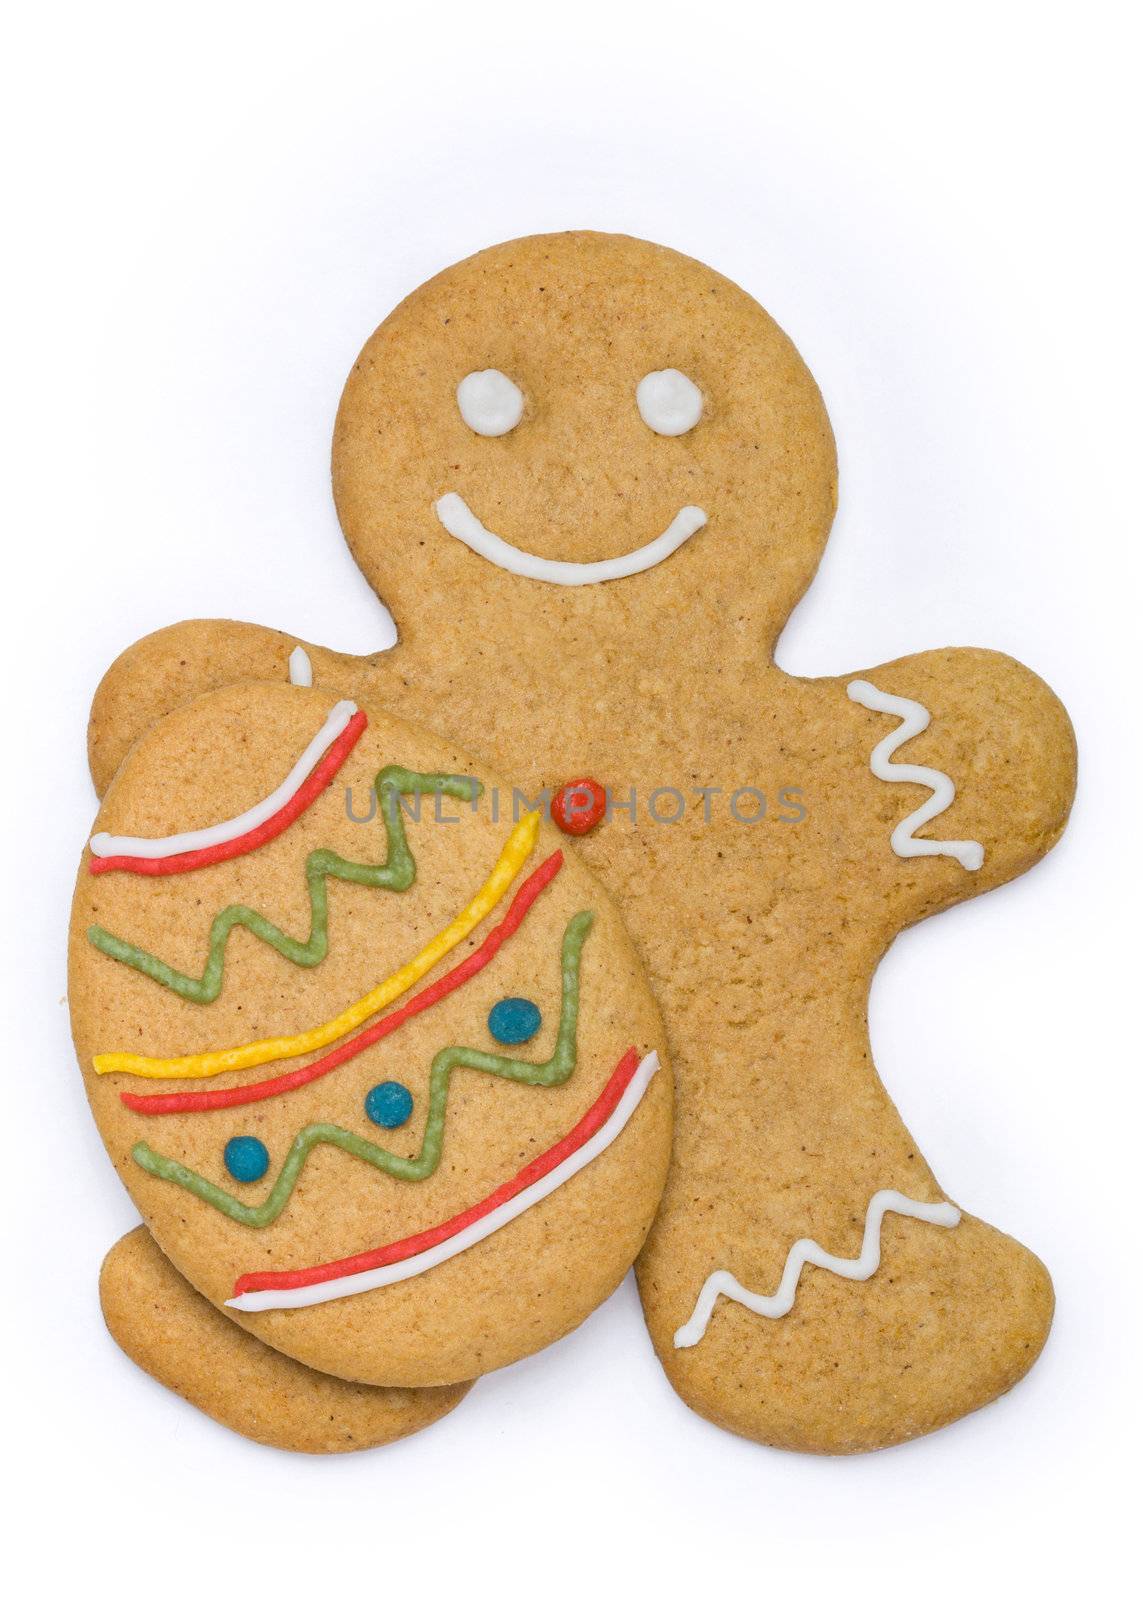 Gingerbread man by RuthBlack